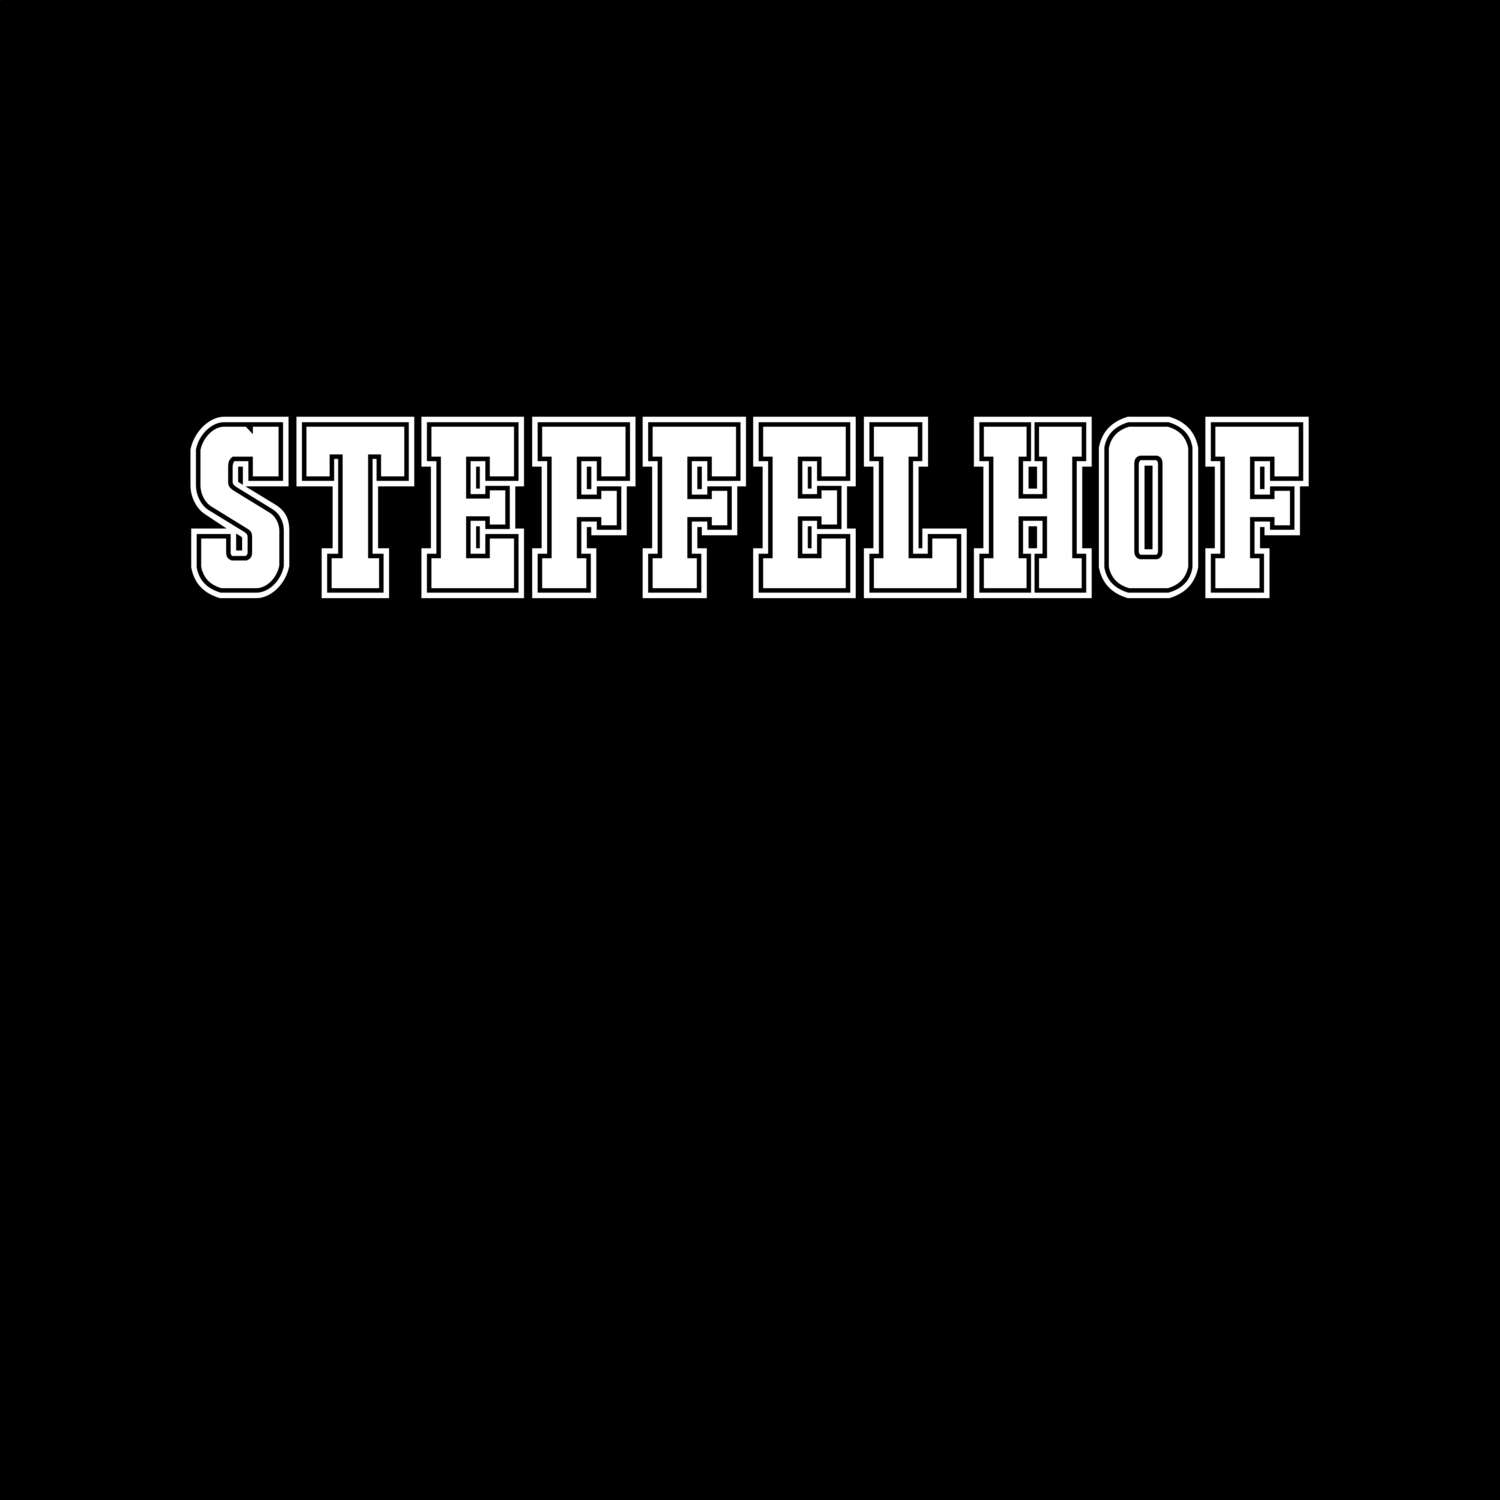 Steffelhof T-Shirt »Classic«